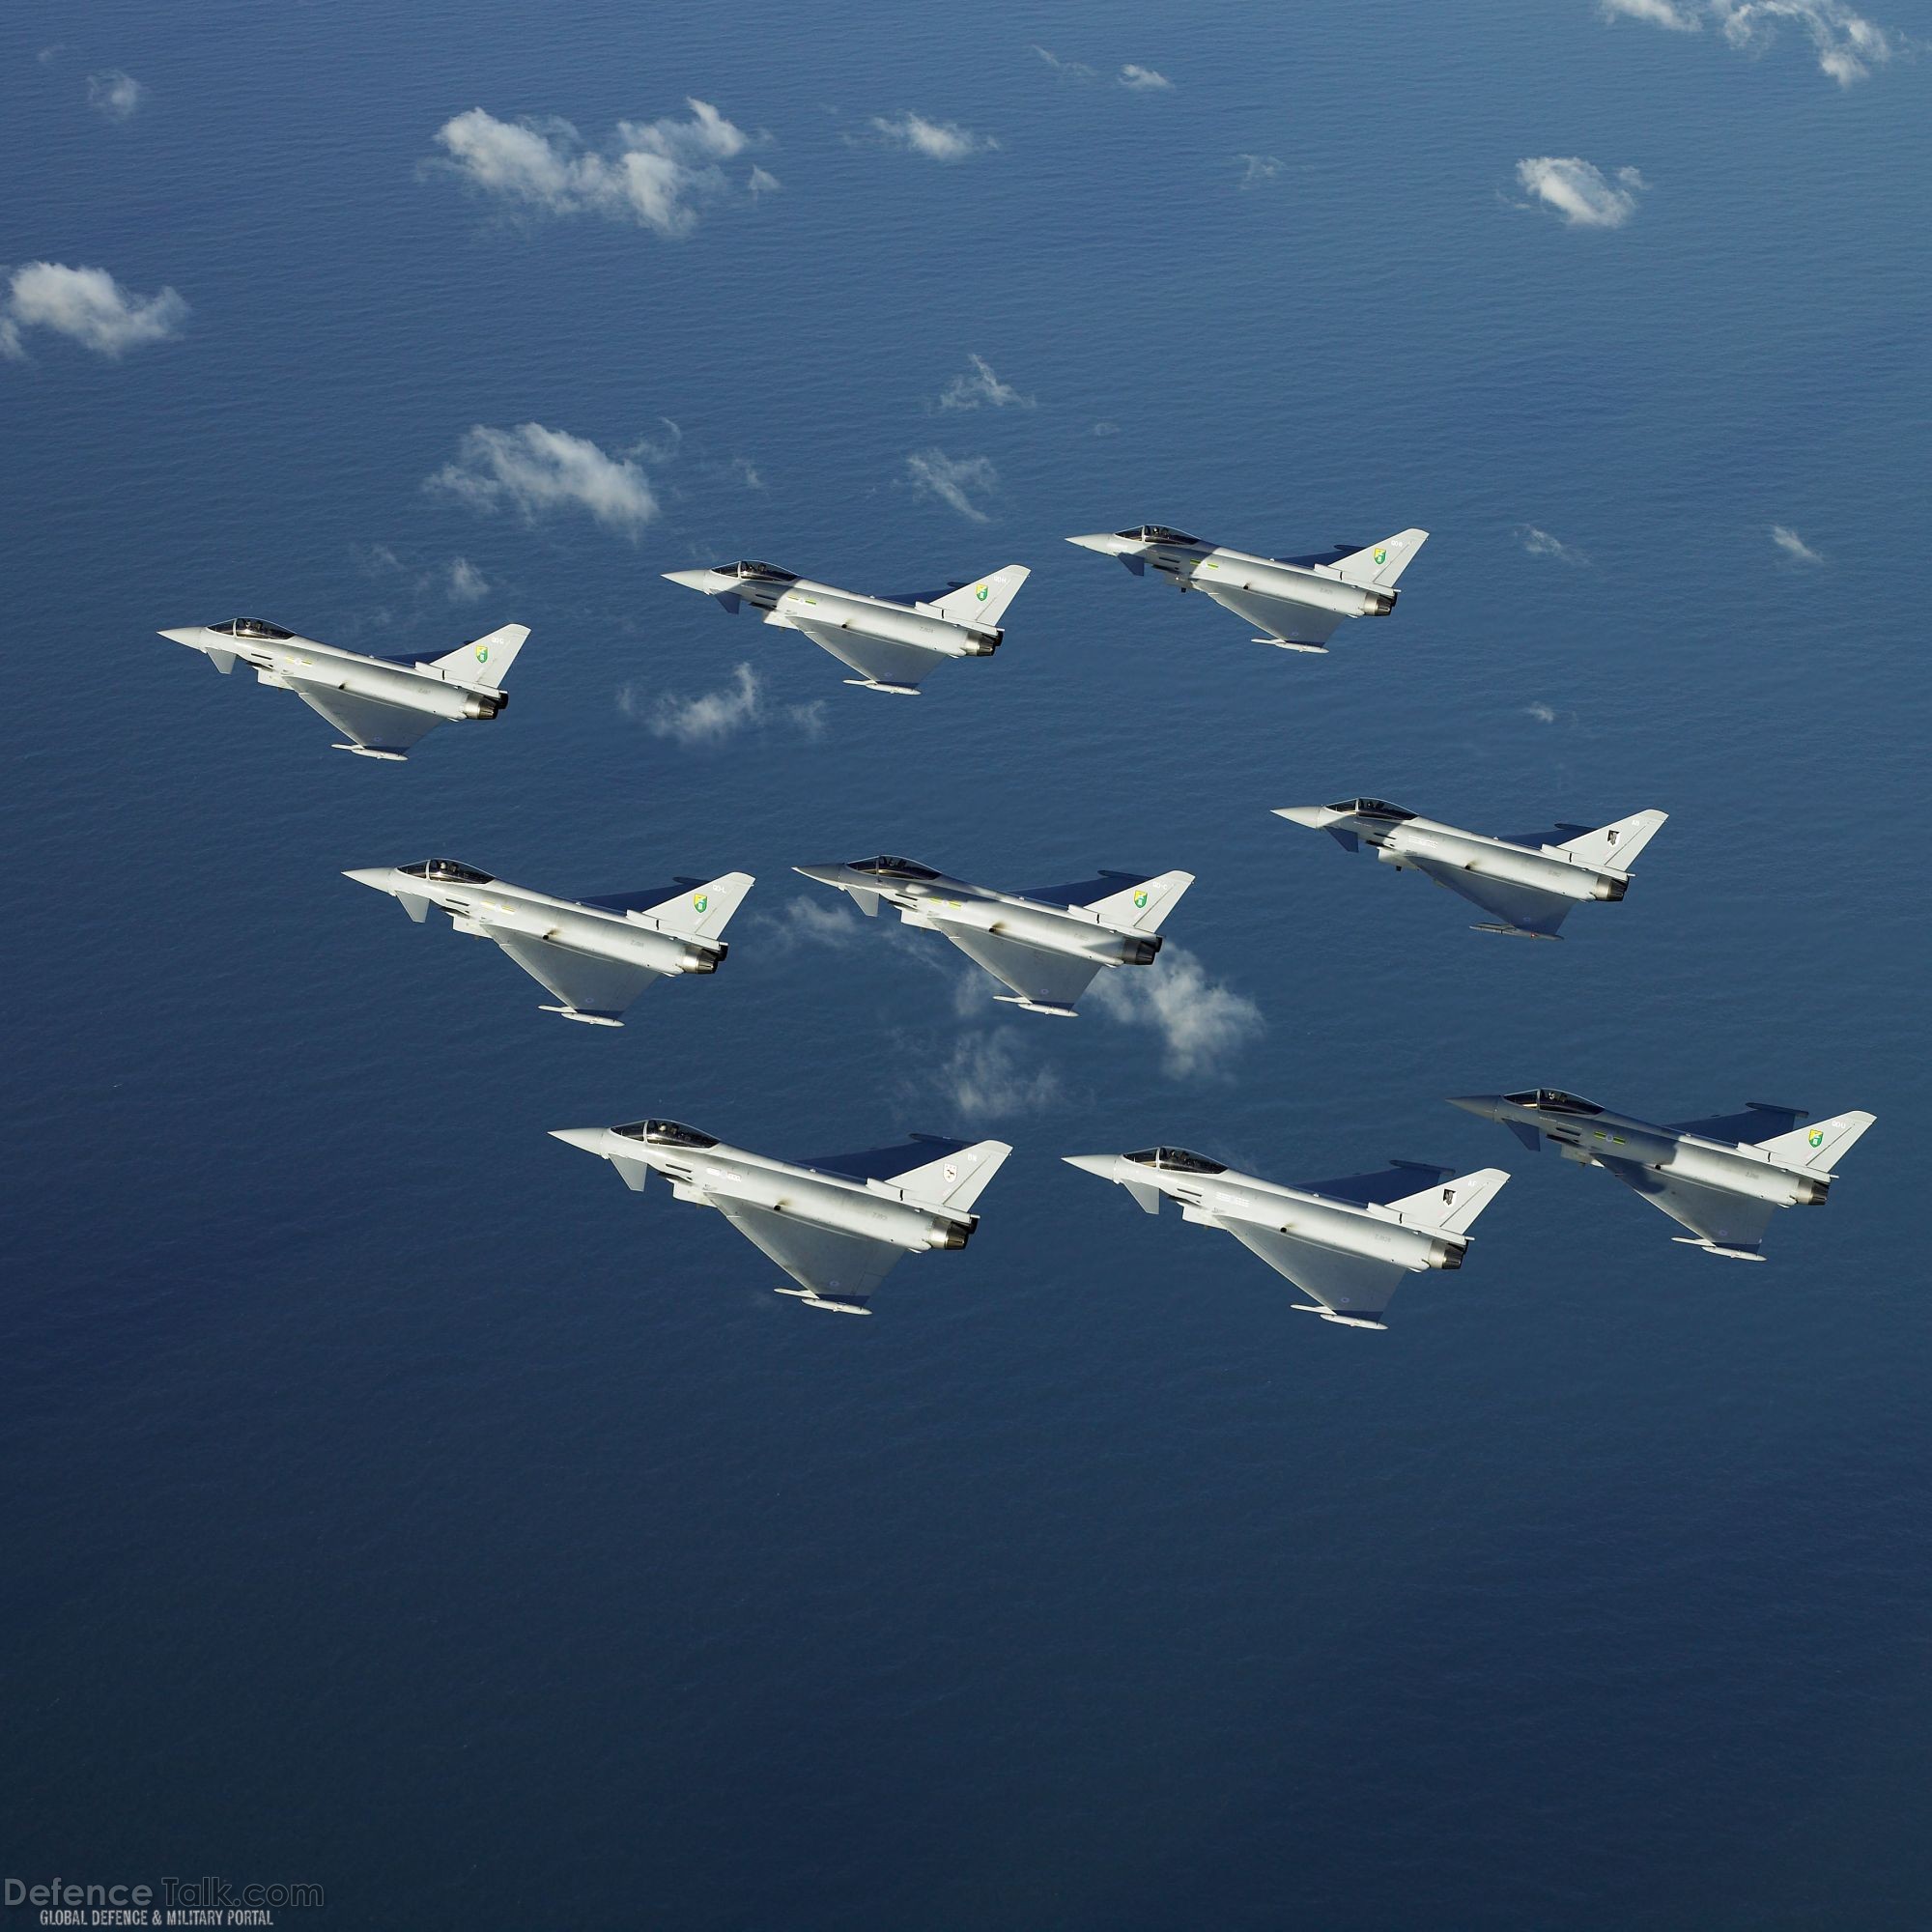 Eurofighter Typhoon aircraft, Royal Air Force